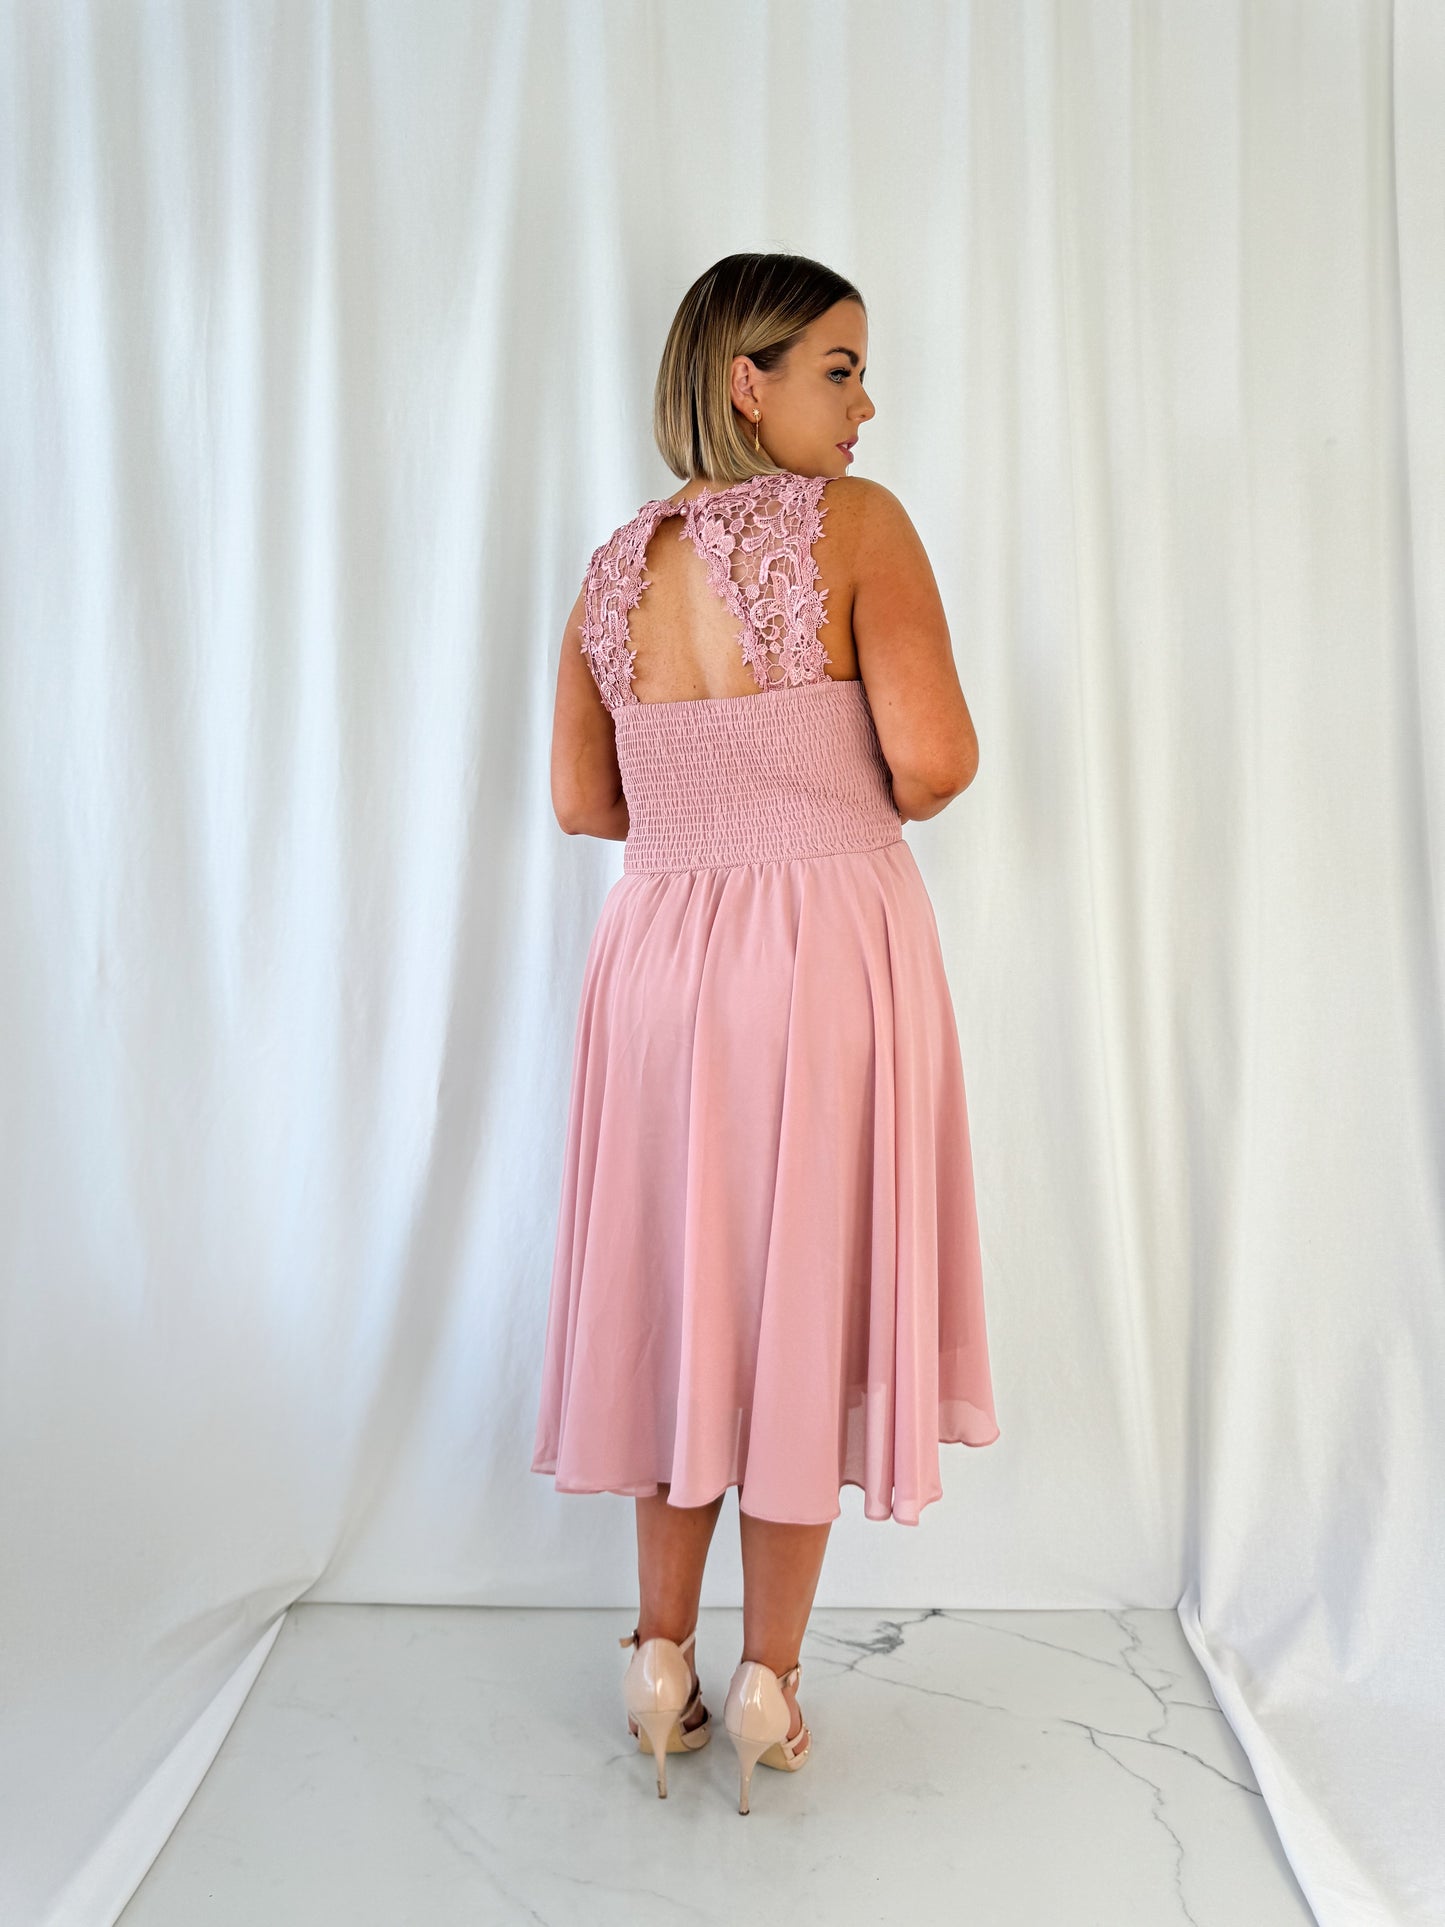 Mathie Embroidered Top Short Curve Dress - Old Rose